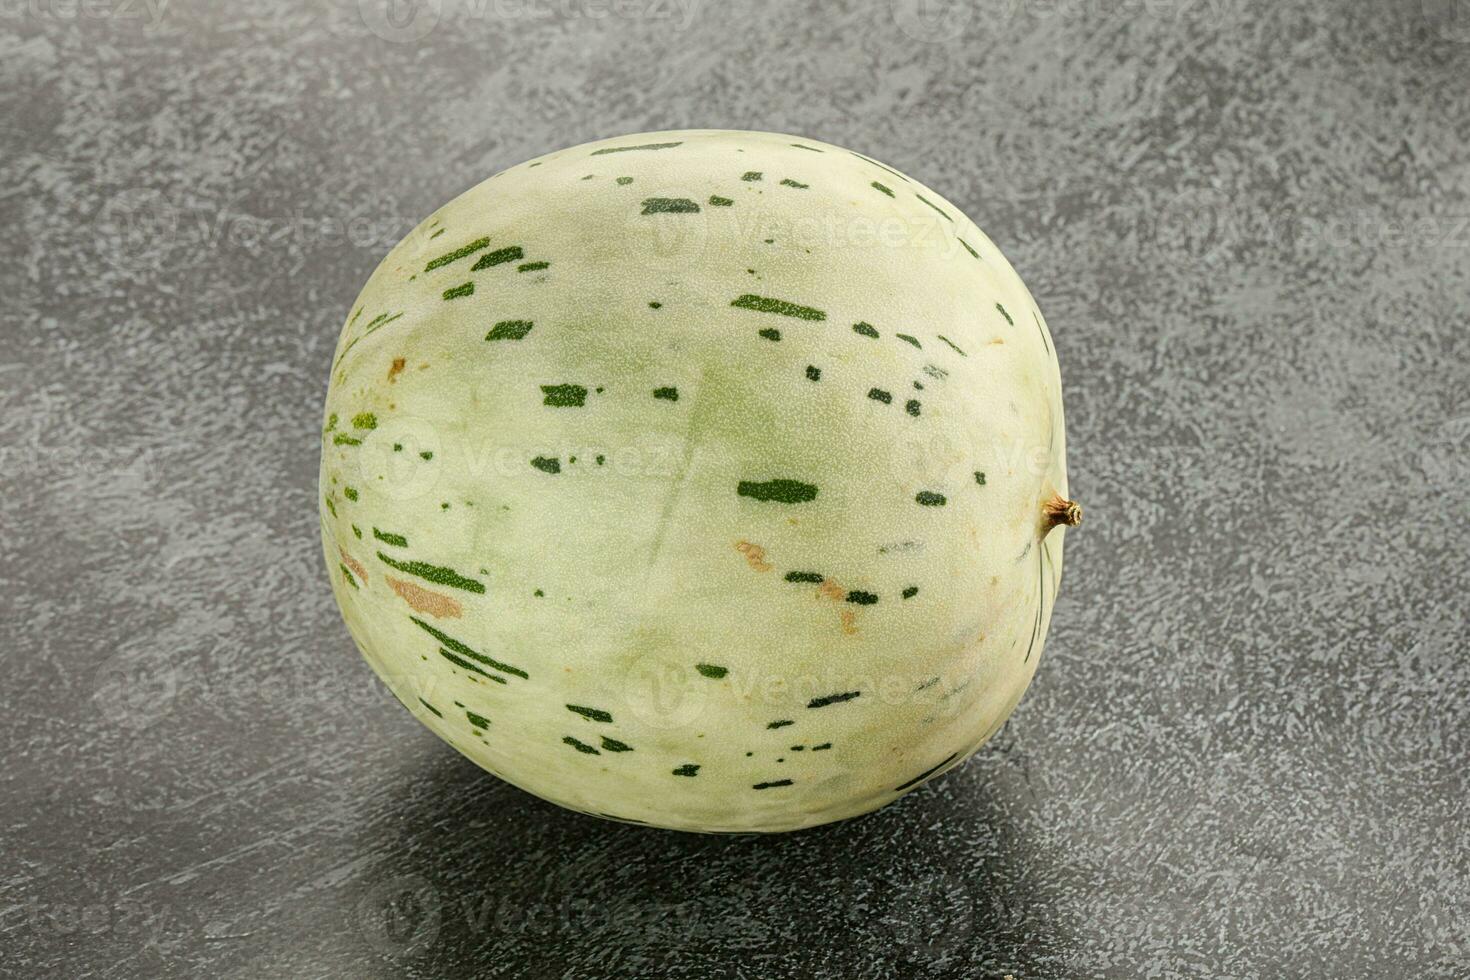 Ripe sweet juicy Dalmatin melon photo